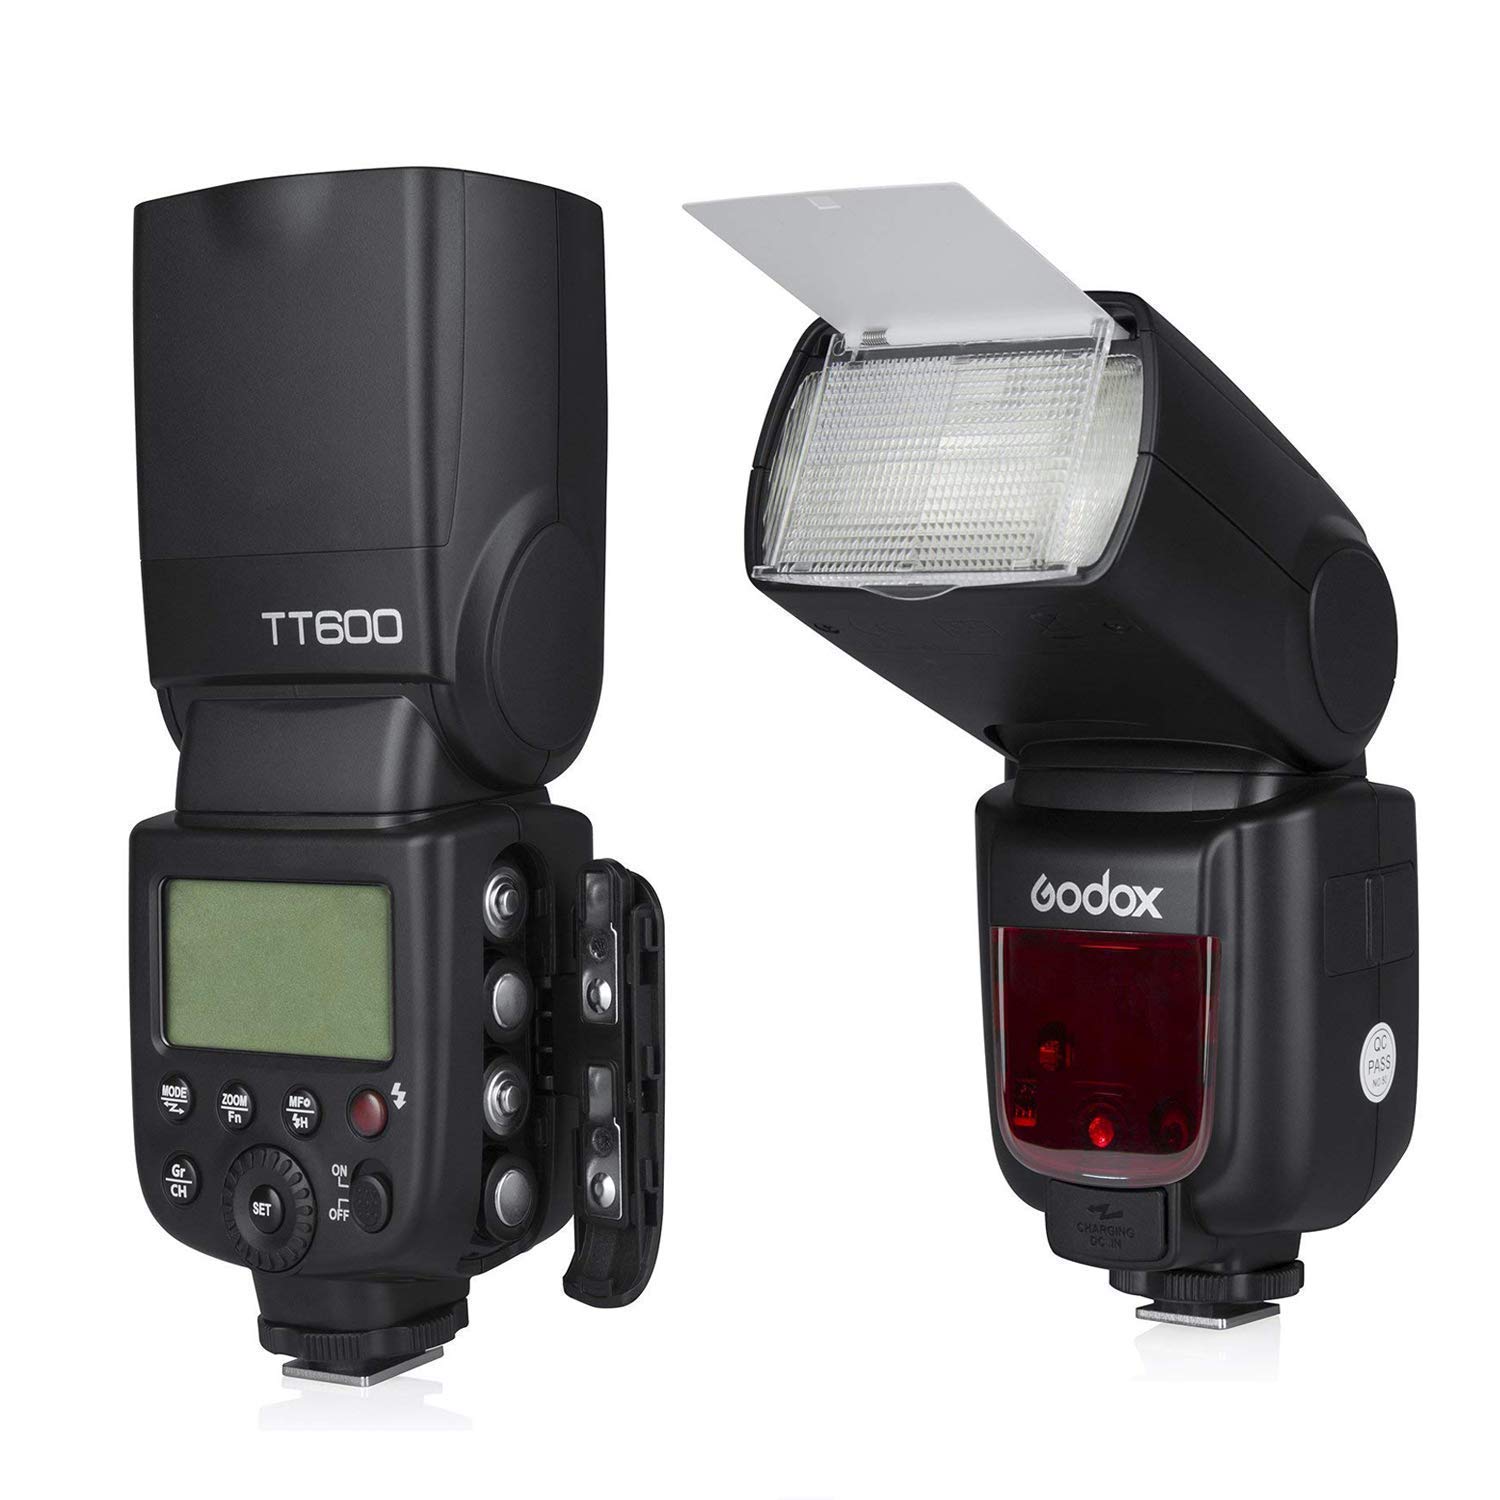 Godox TT600 Camera Flash Speedlite, Master/Slave Function, GN60 Built-in 2.4G Wireless X System 1/8000s HSS Flash with Godox XPro-S TTL Wireless Flash Trigger Compatible for Sony Camera